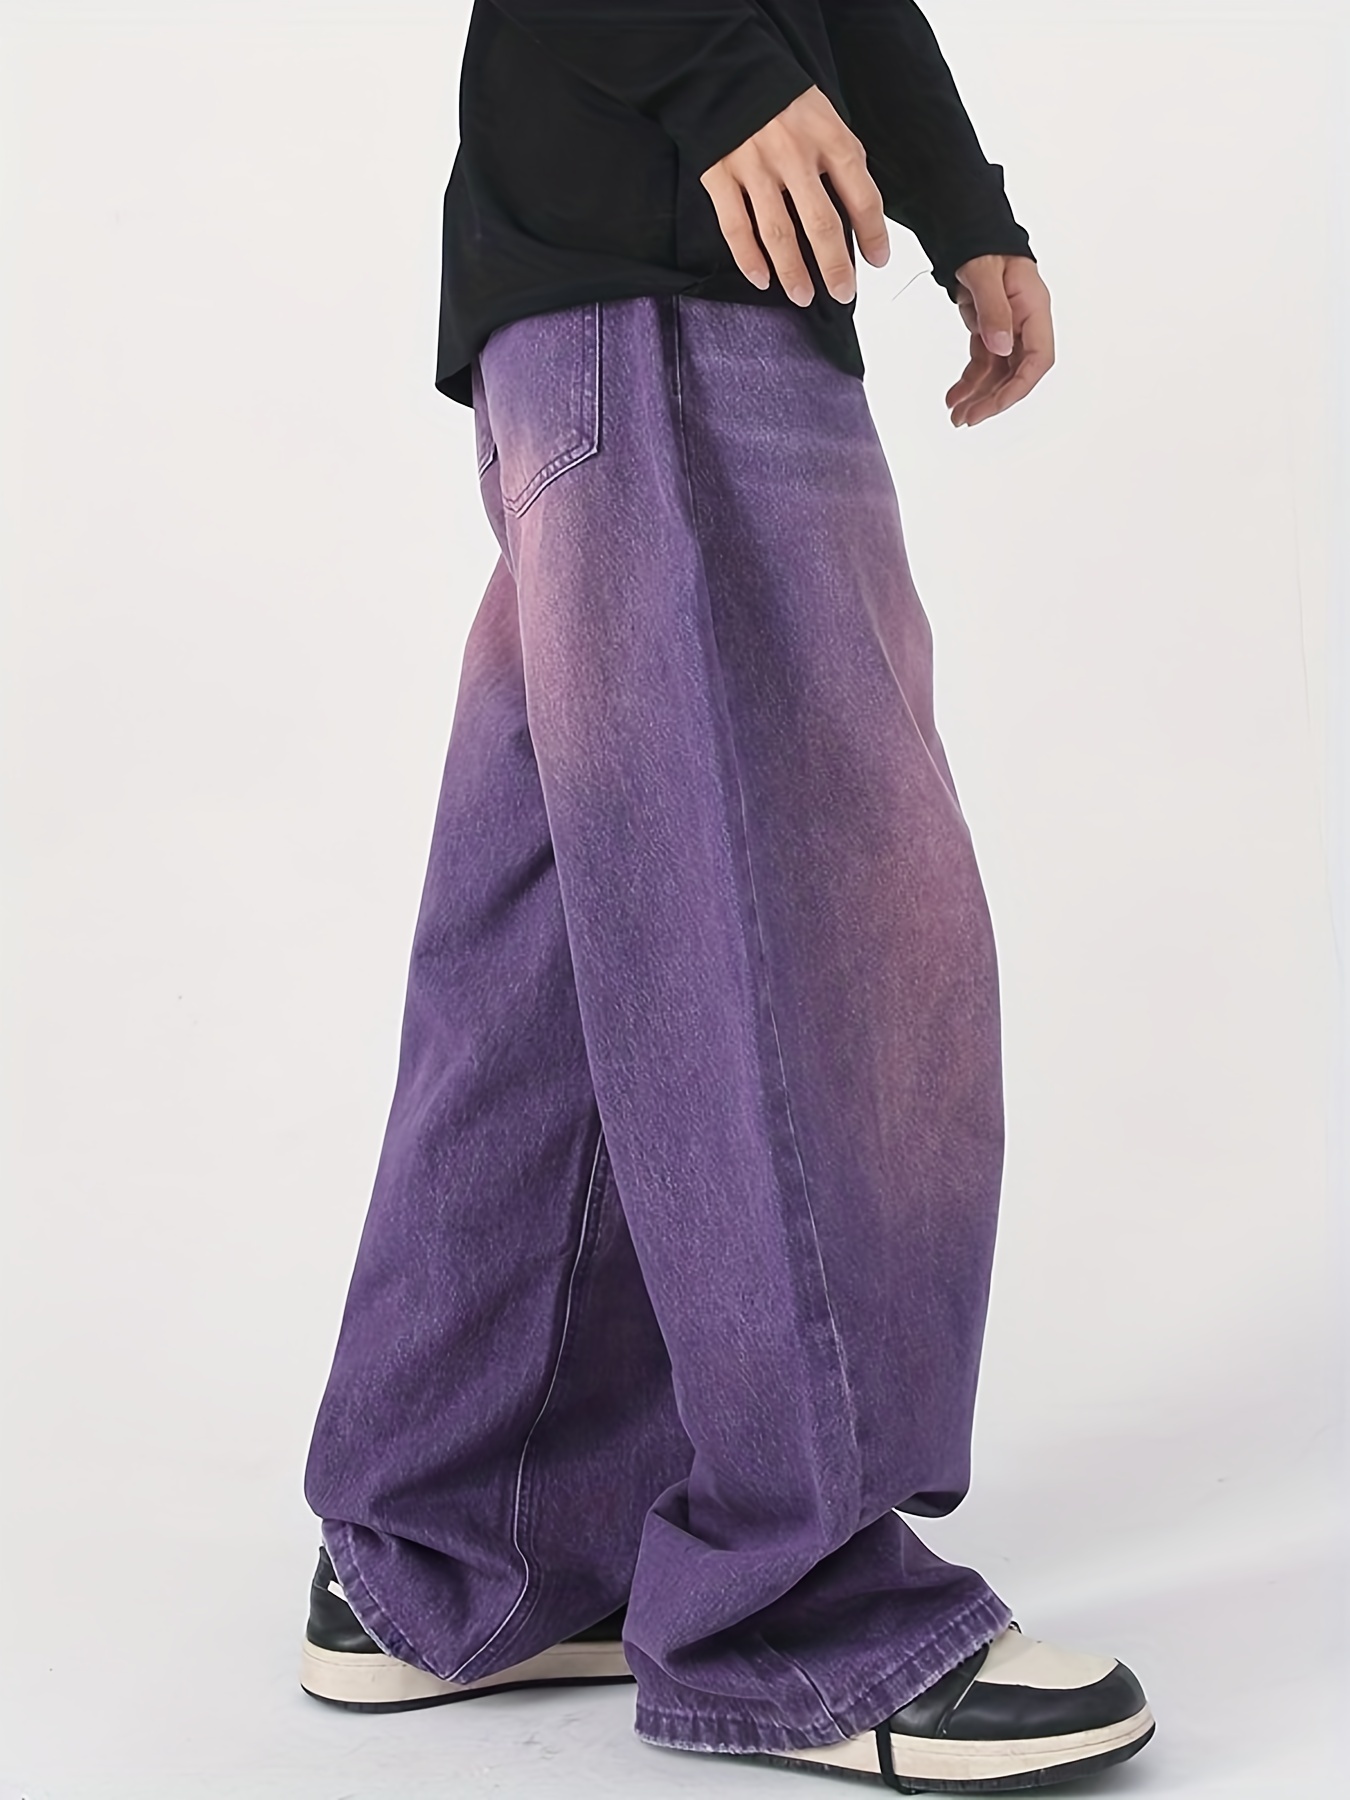 Purple Brand Jeans on Fat Thighs Men